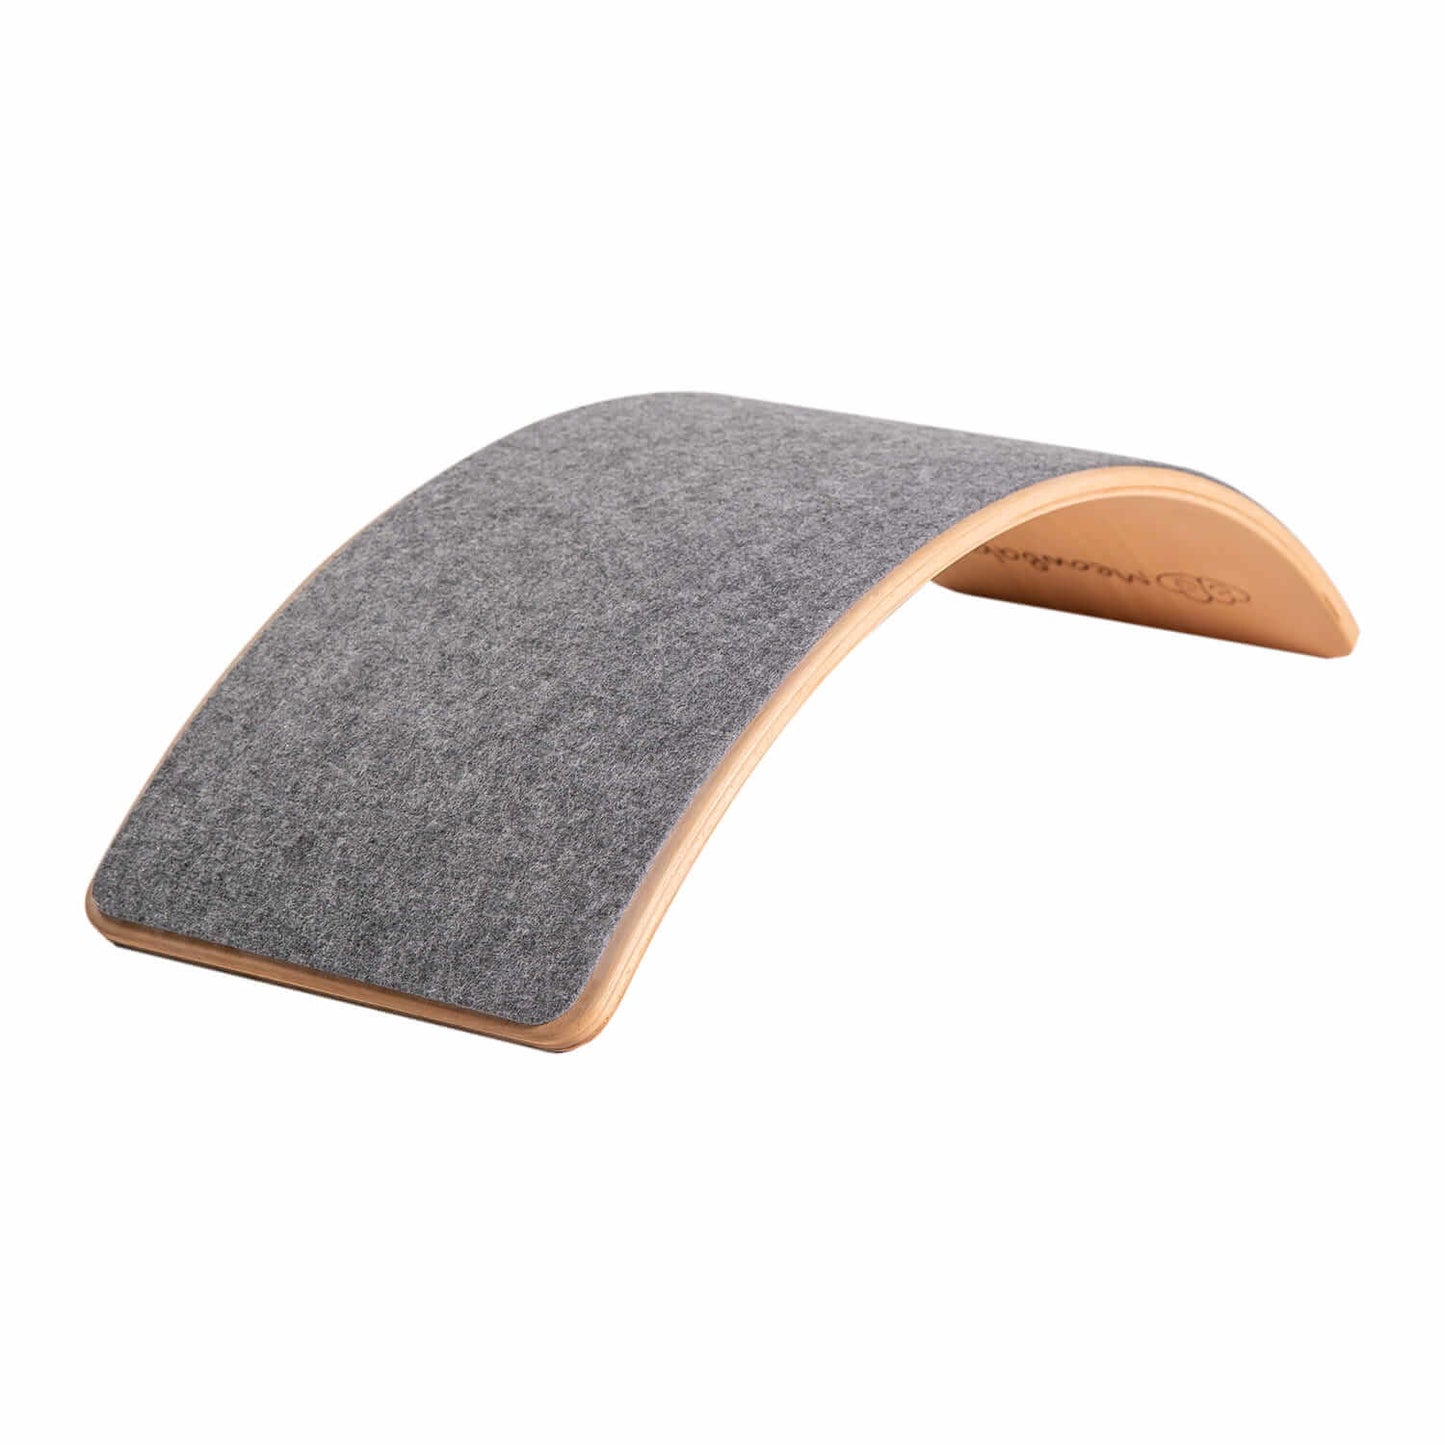 MeowBaby® Balance Board Wooden balancing board with felt